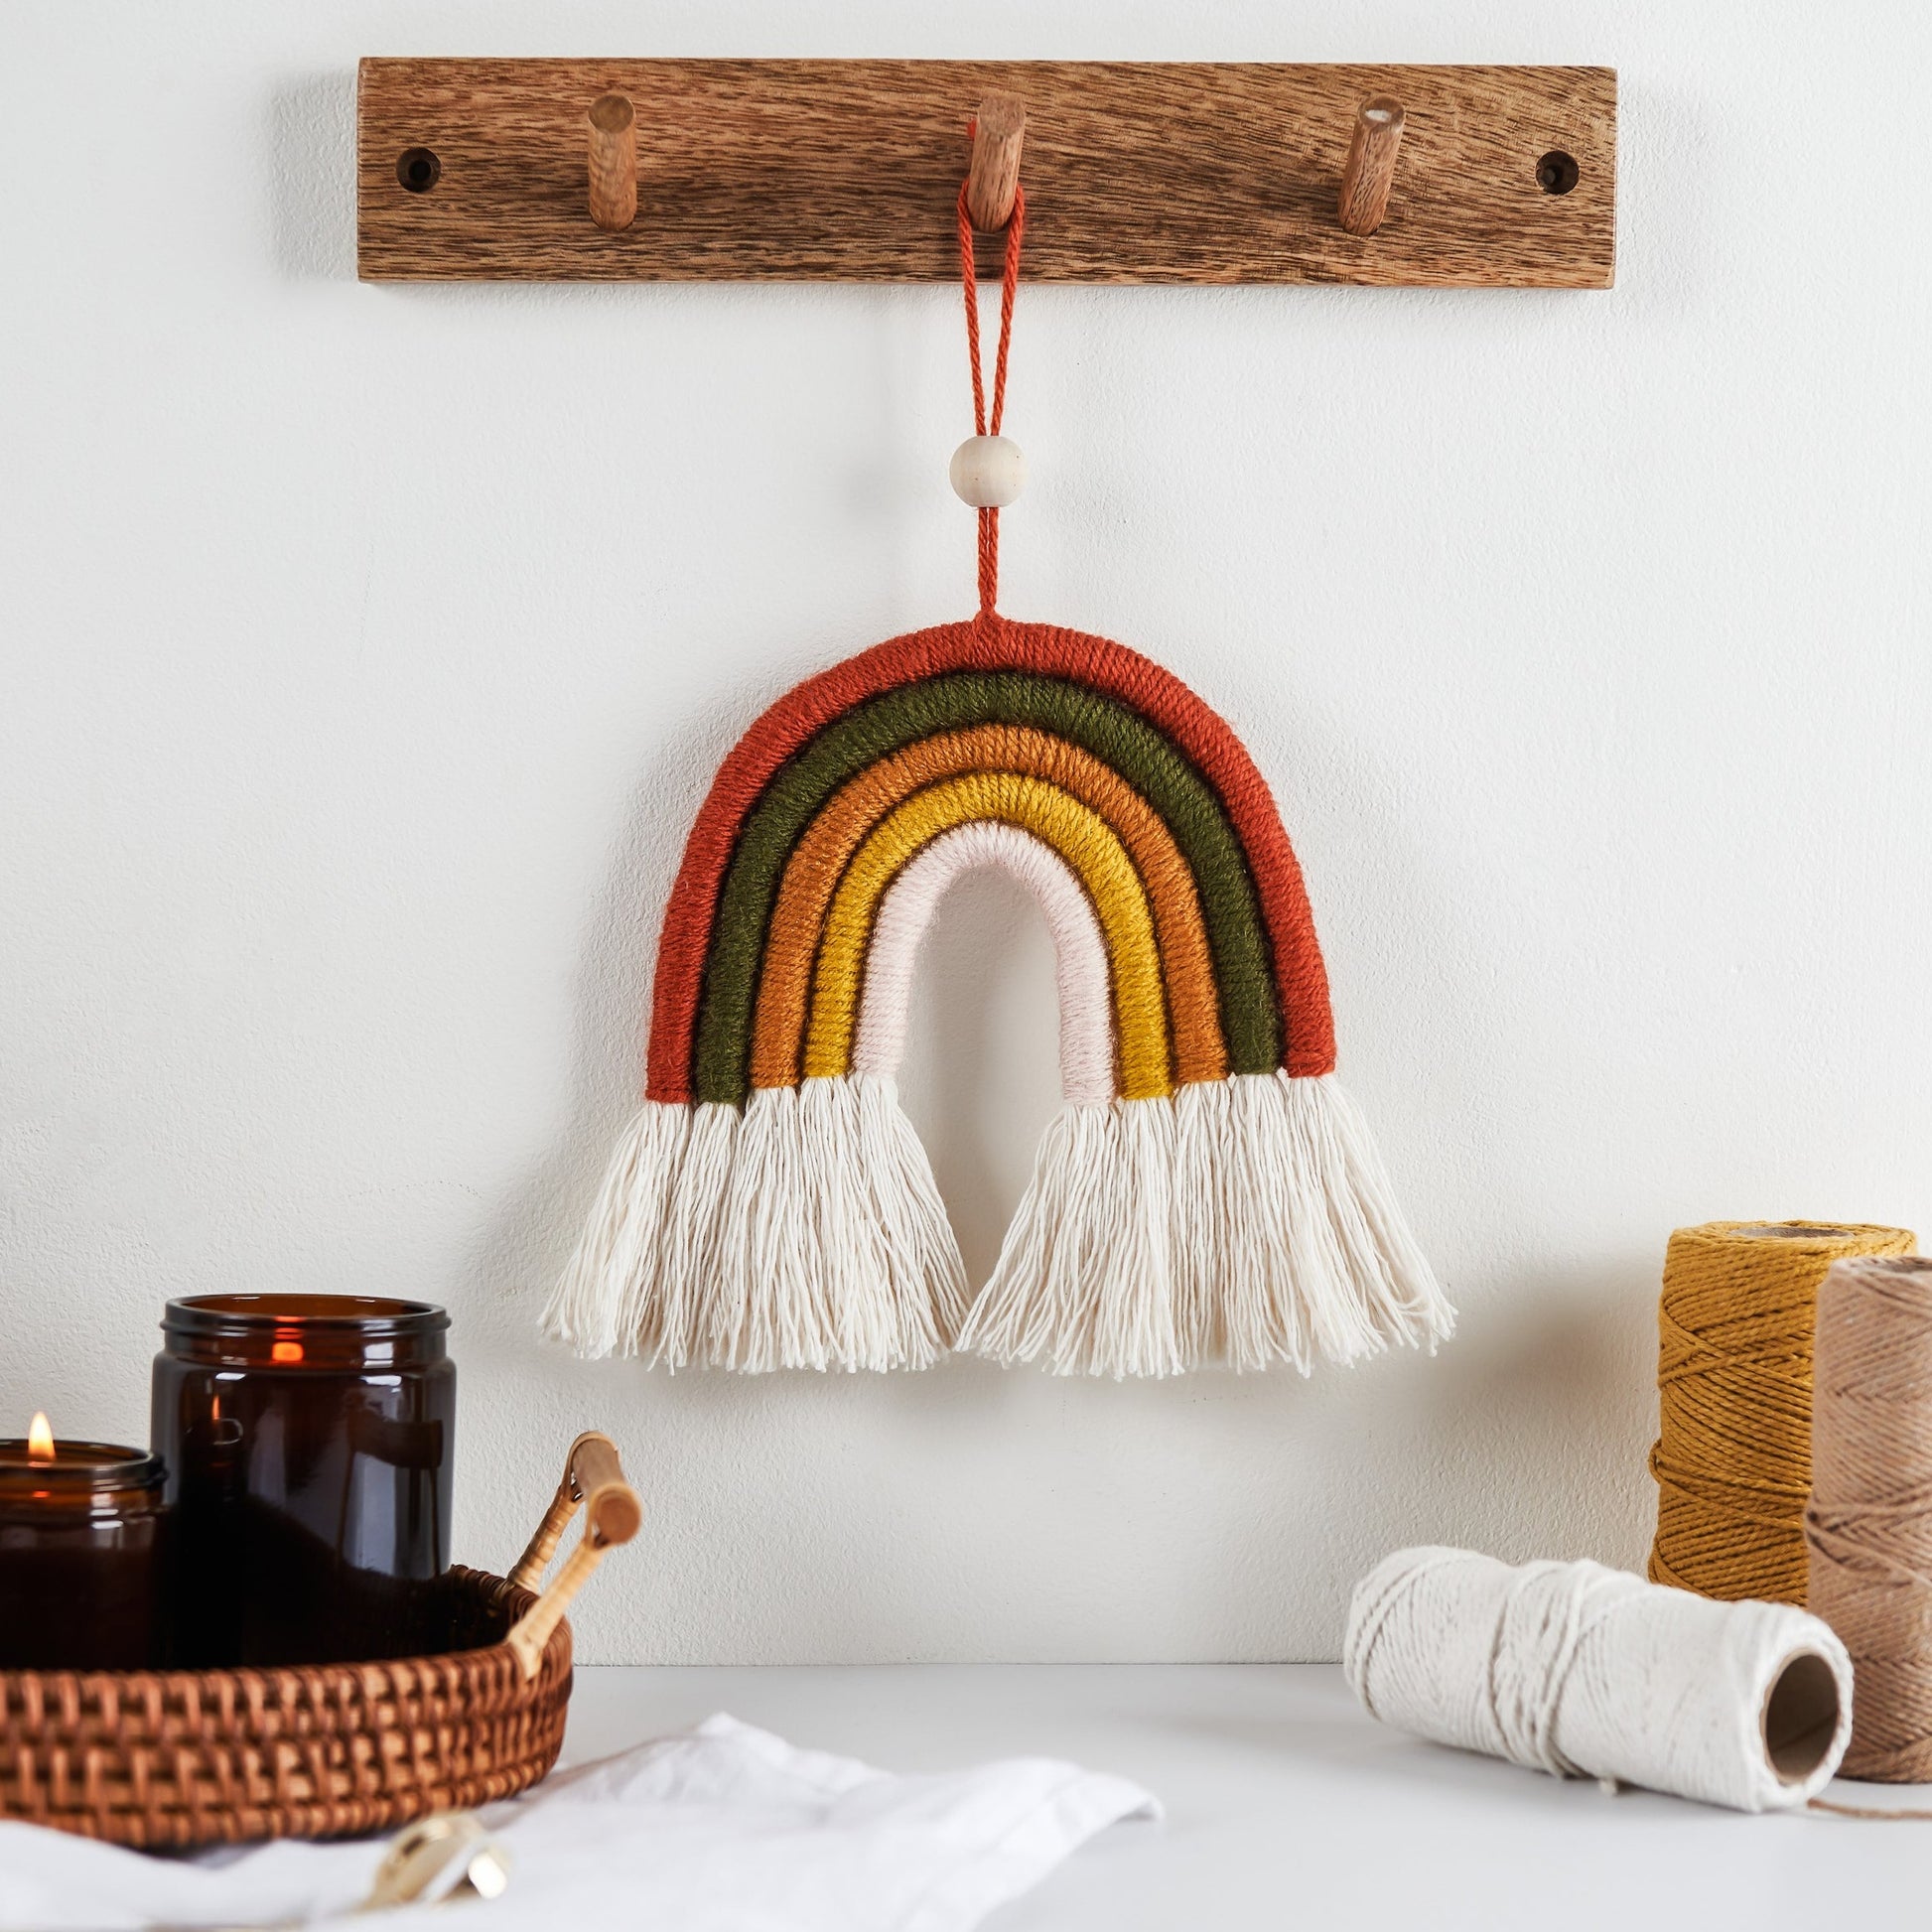 Make Your Own Autumn Rainbow Macrame Craft Kit – MTH Craft Studio